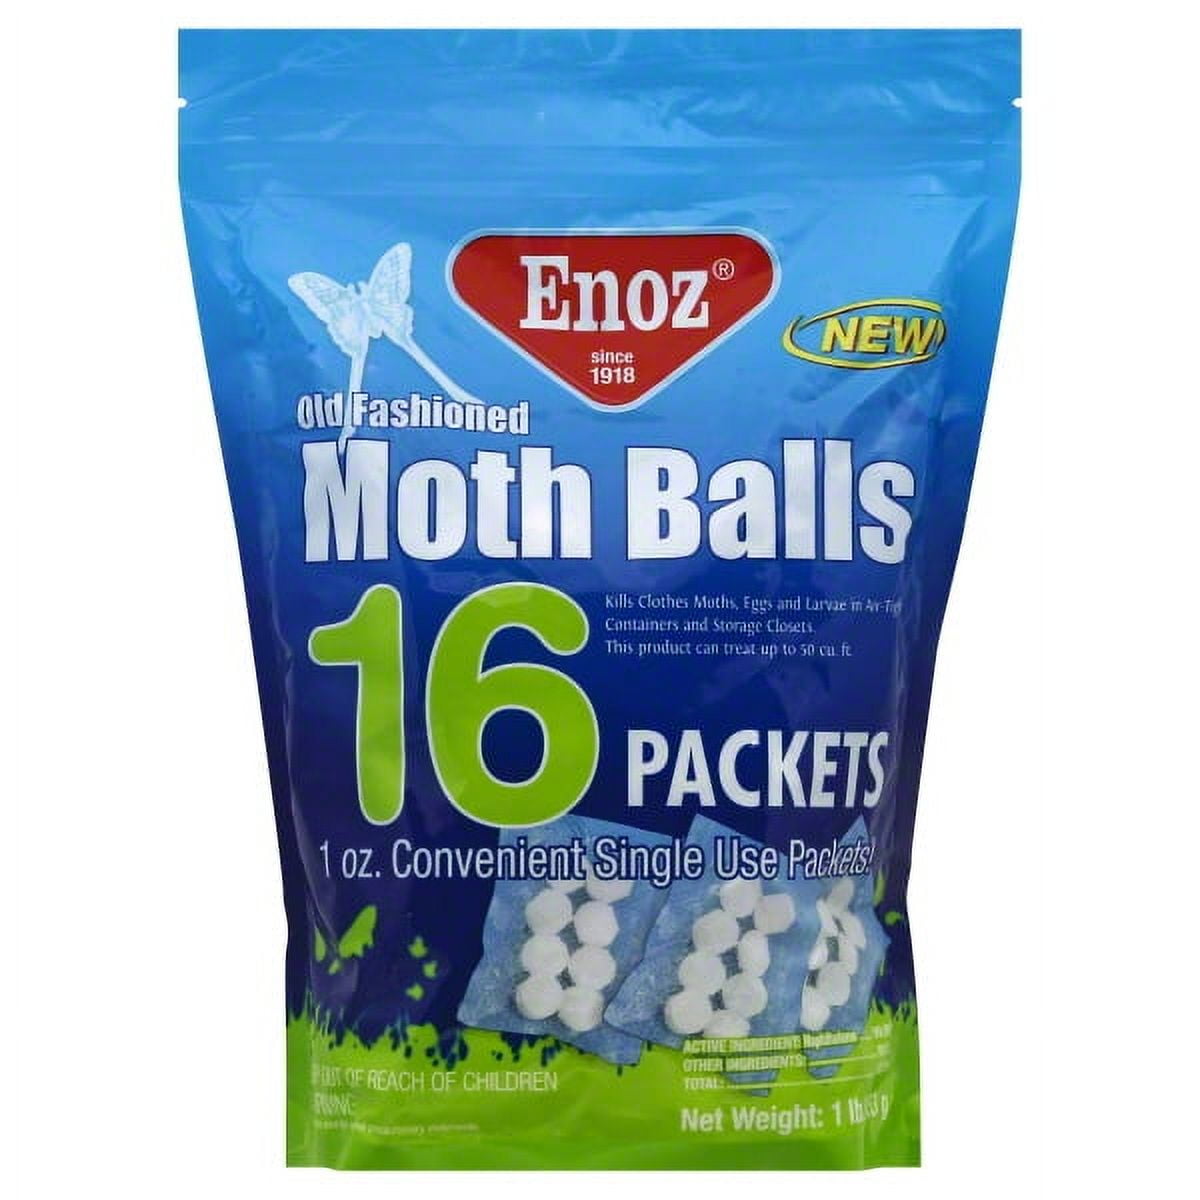 Enoz Old Fashioned Moth Balls, 16 Ounce